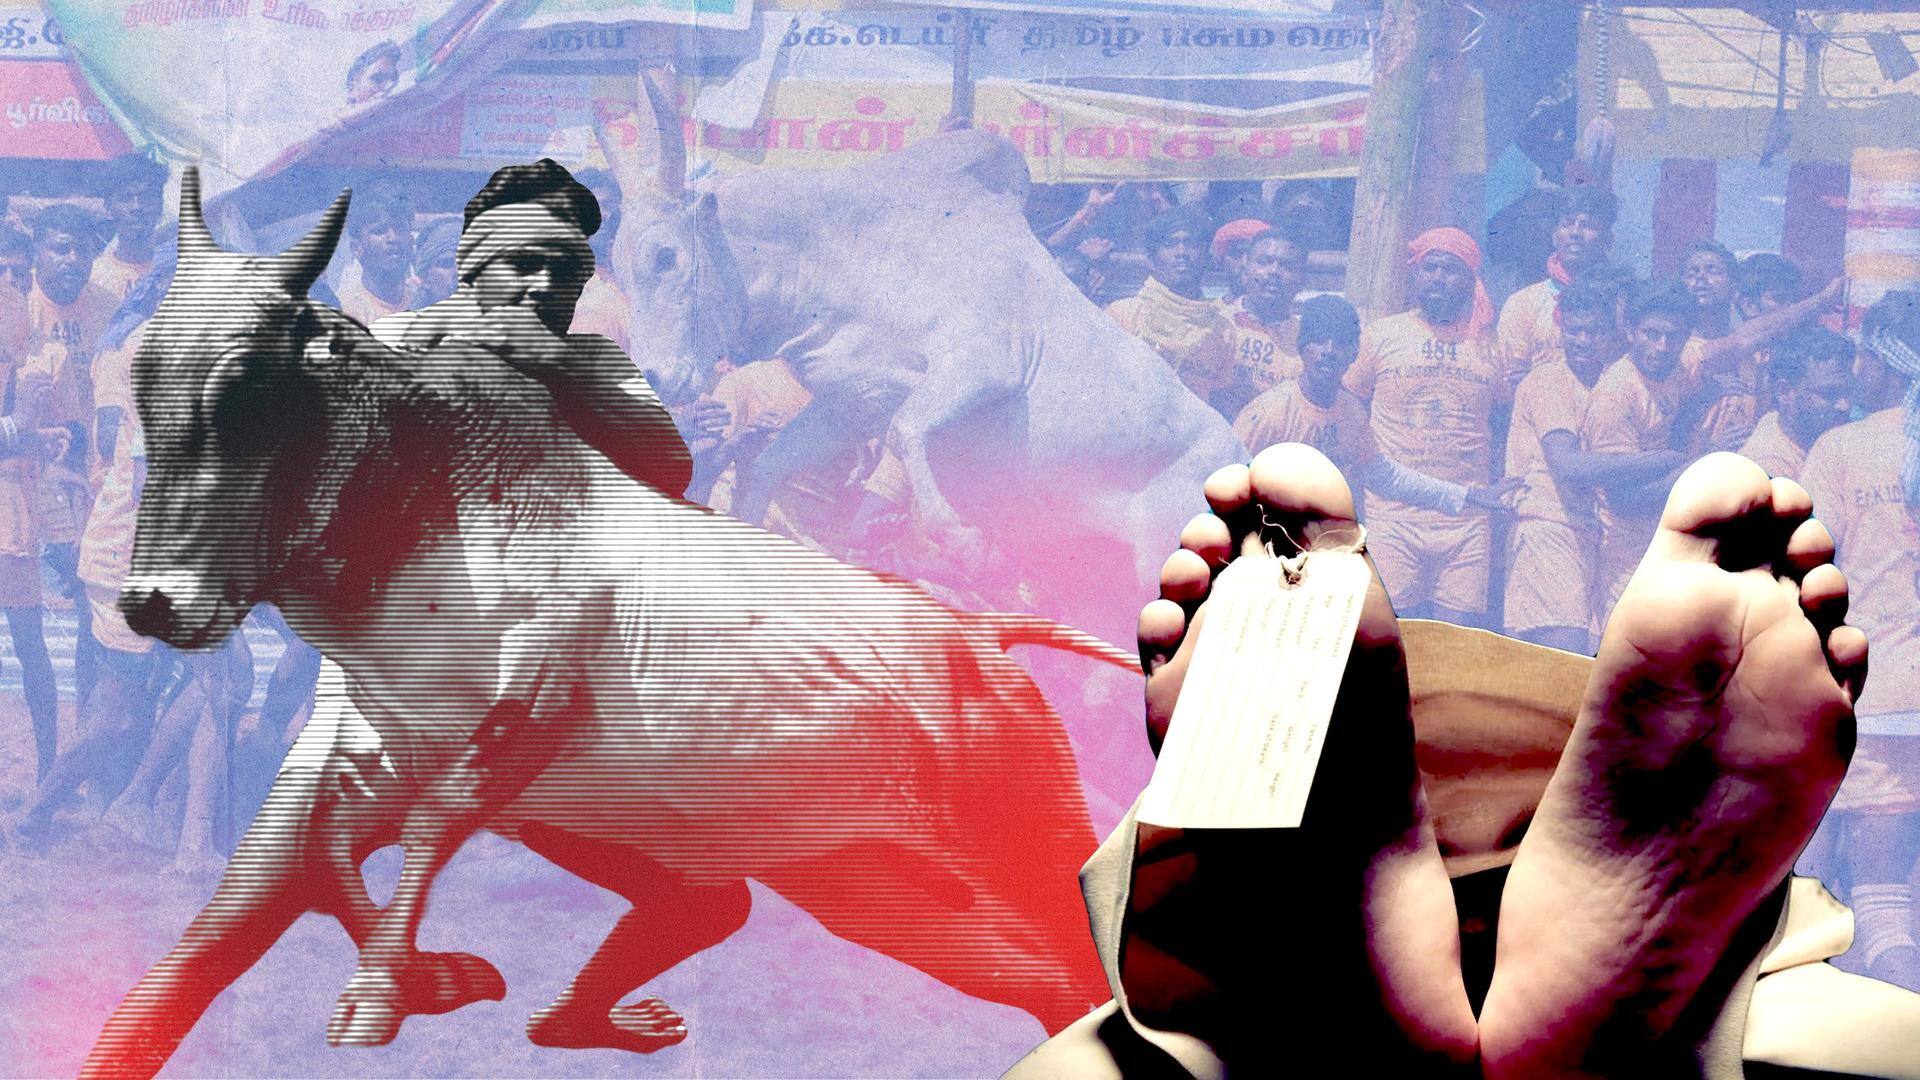 Tamil Nadu: 2 killed, 39 injured in bull-chasing event